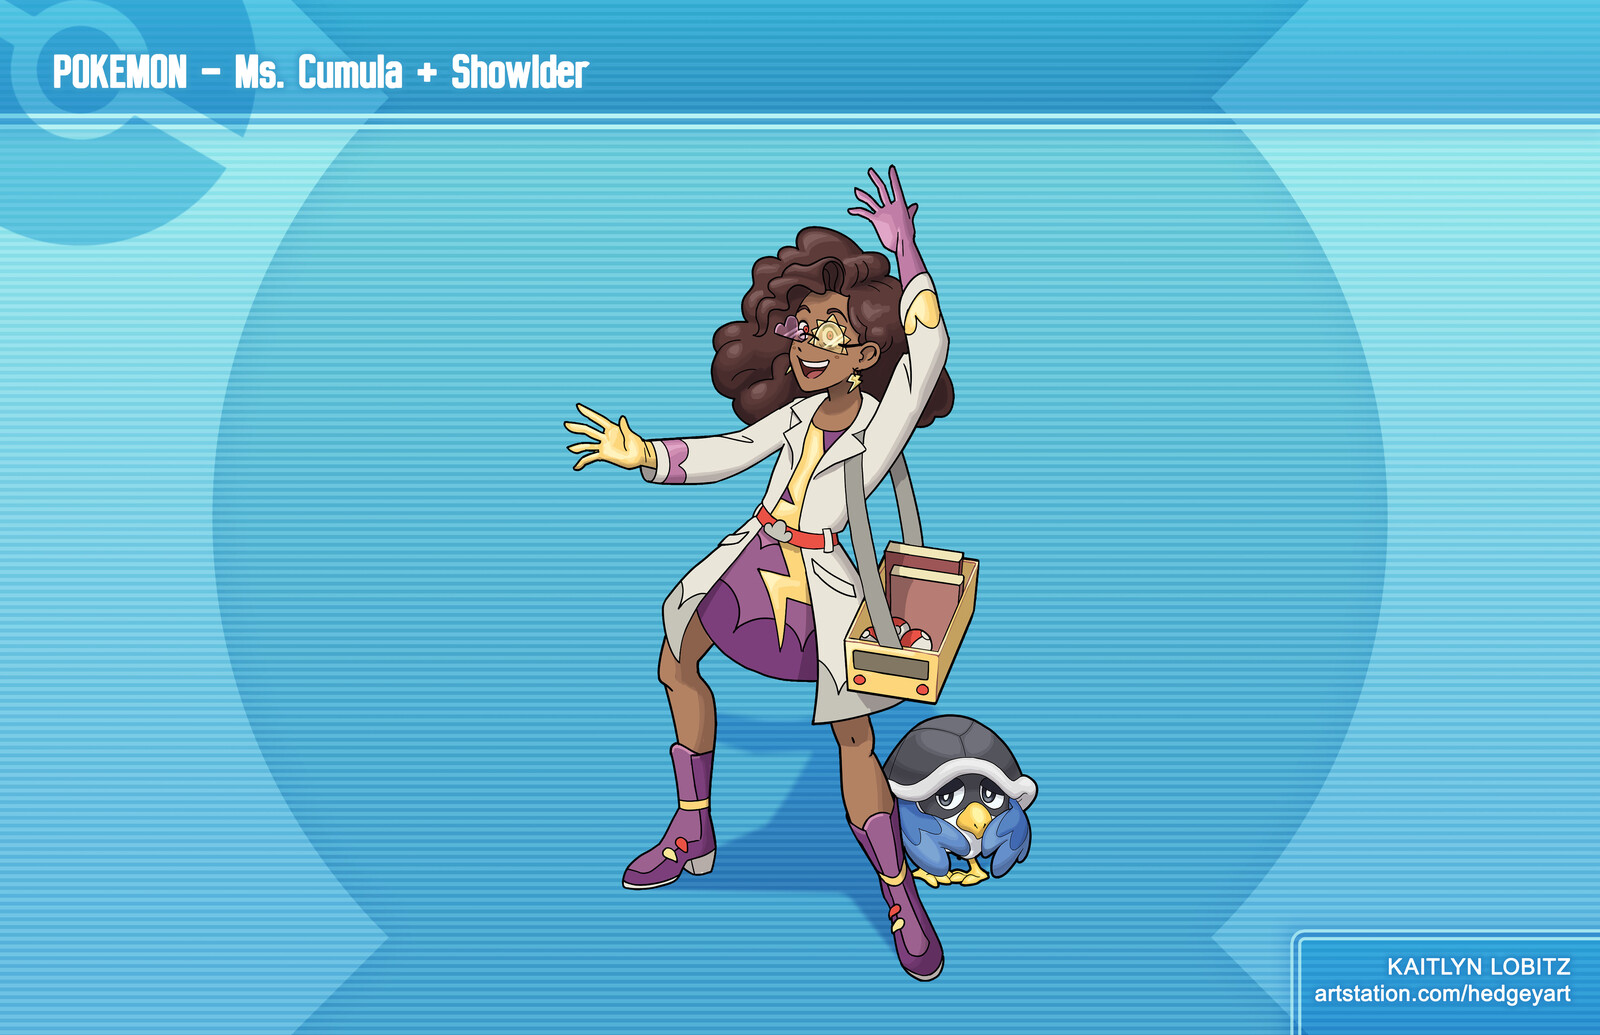 Pokemon Showlder and Trainer Ms. Cumula